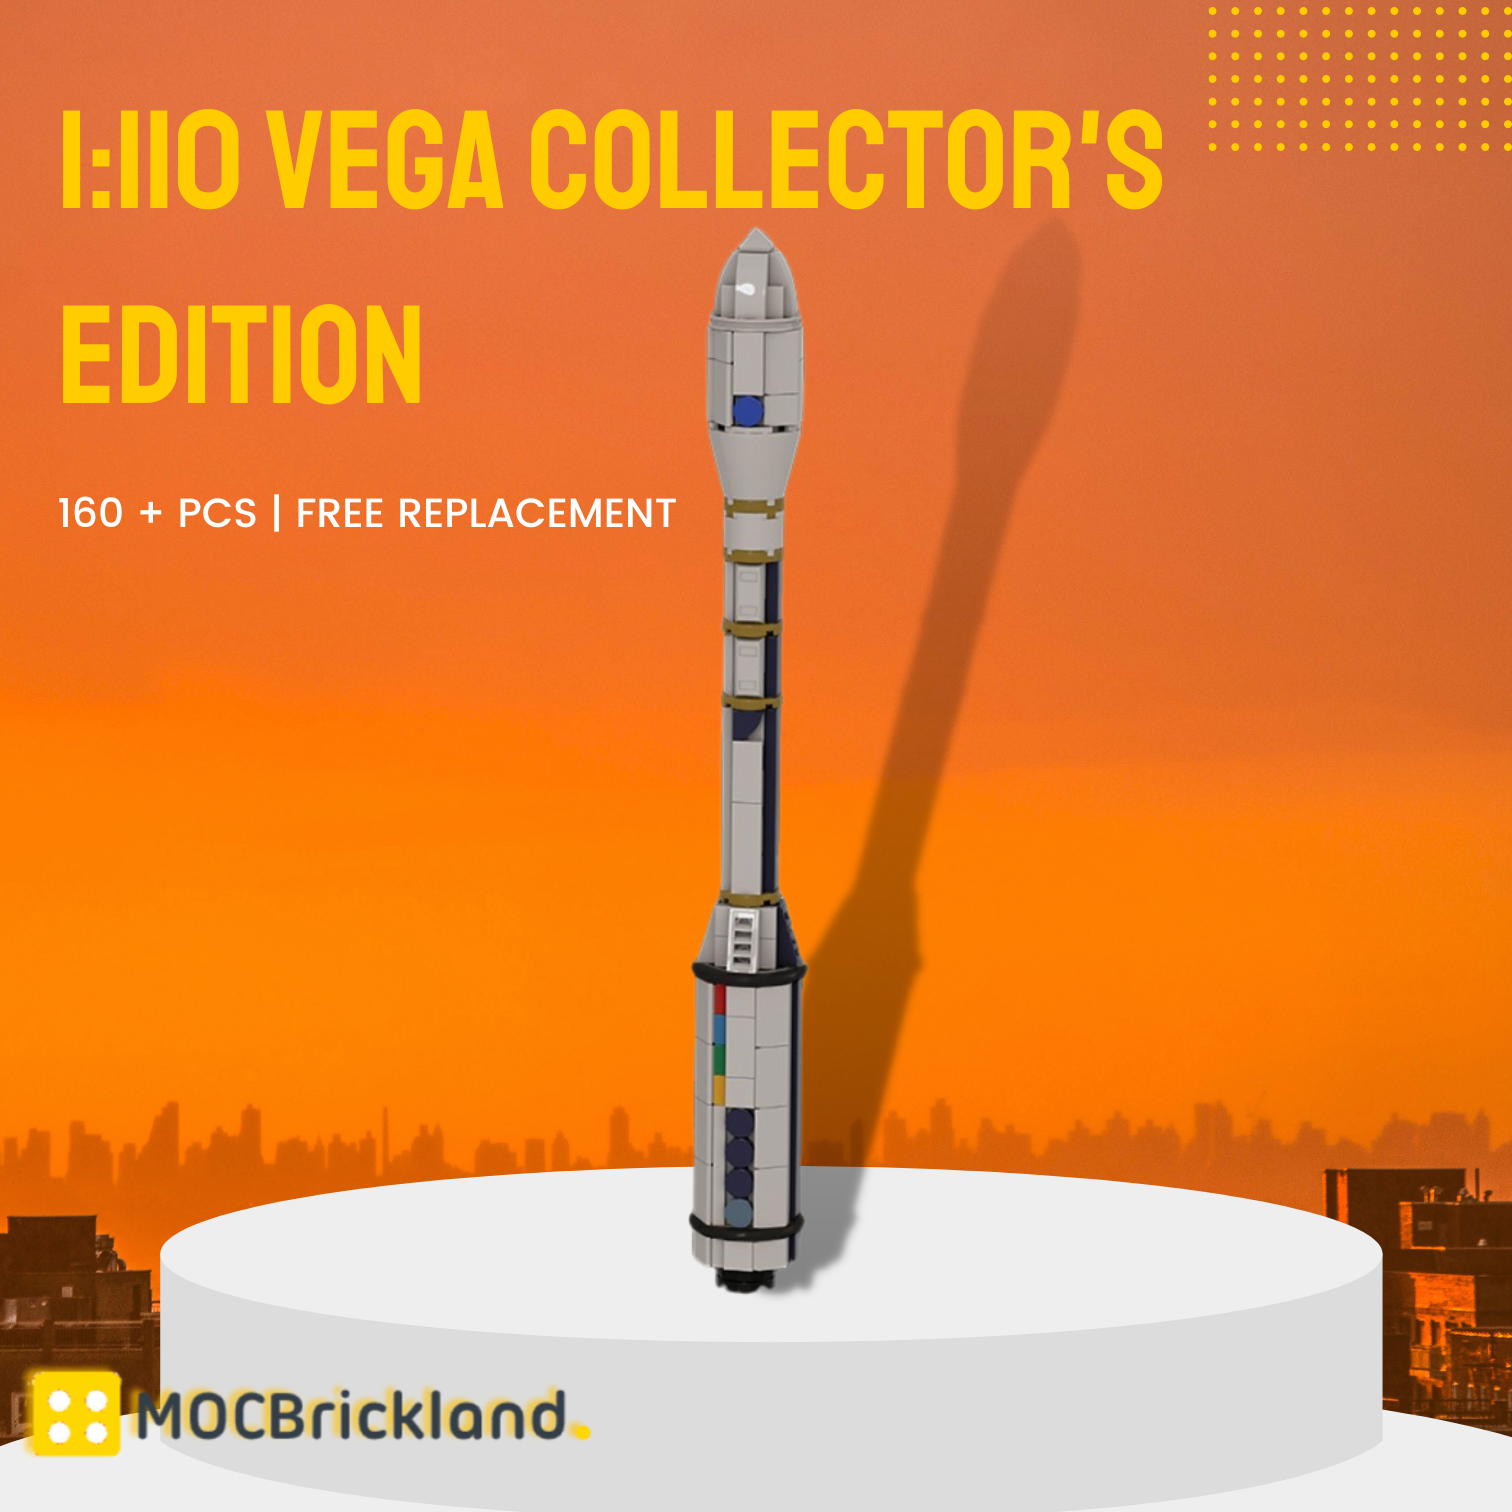 Space MOC-72869 1:110 Vega Collector’s Edition MOCBRICKLAND